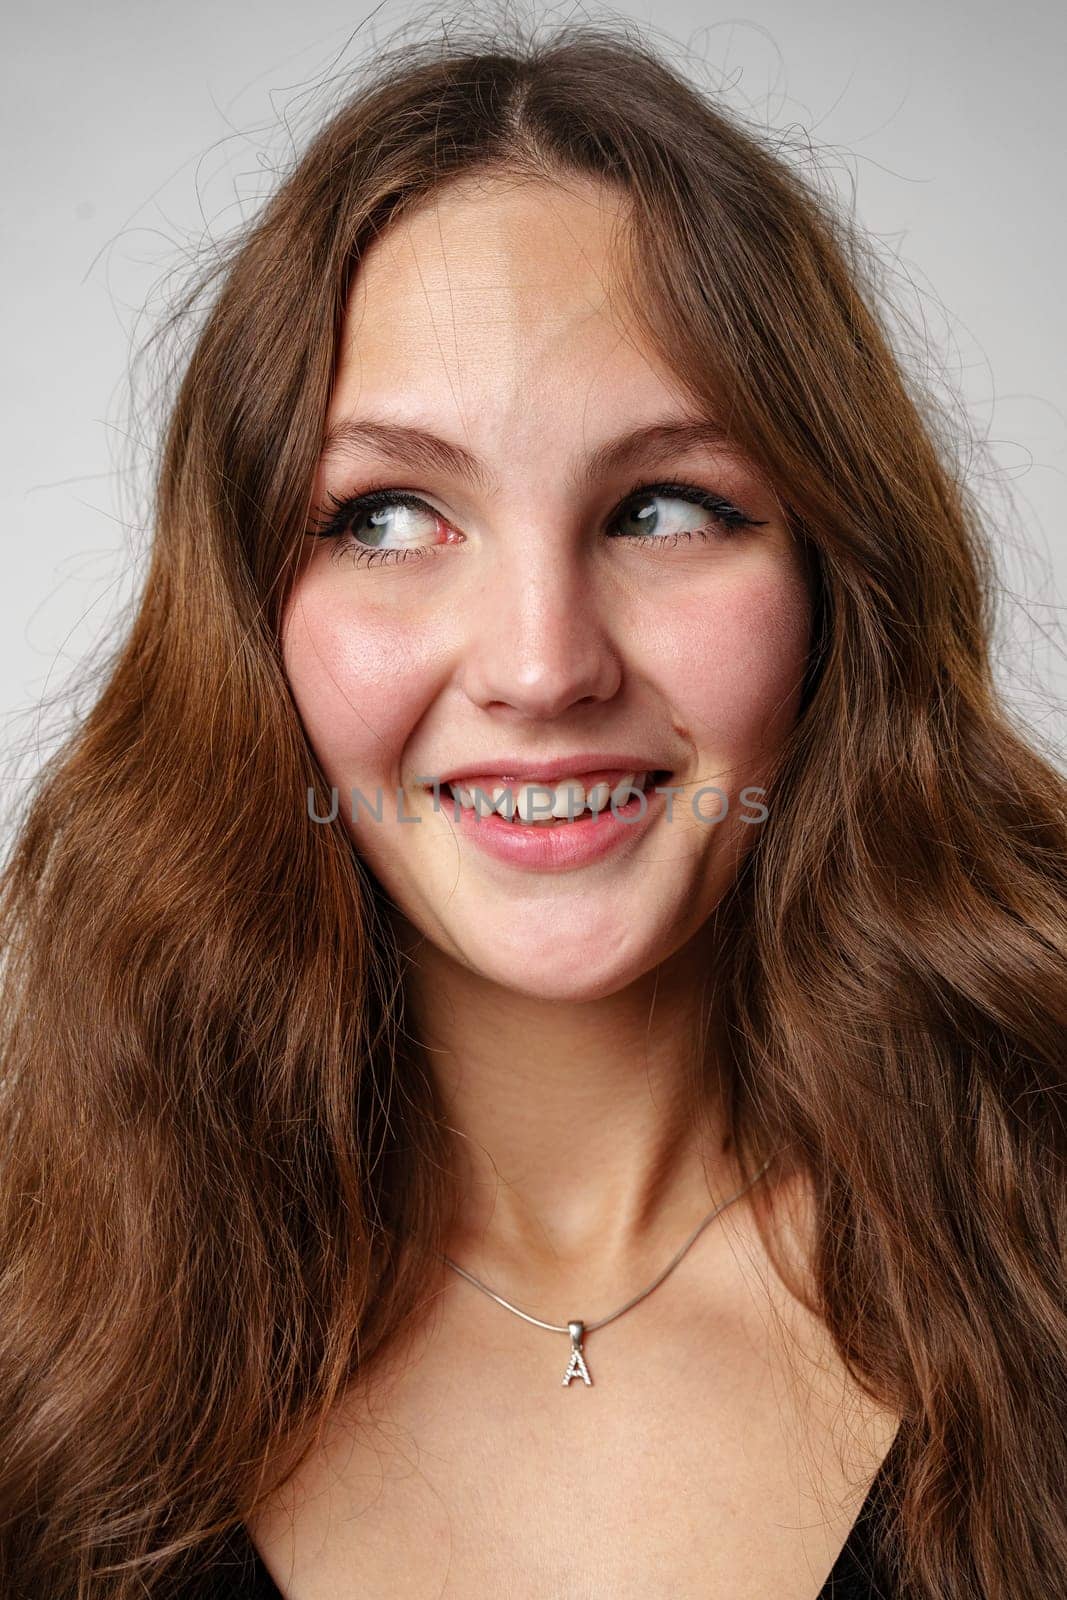 Woman With Long Brown Hair Smiling at Camera by Fabrikasimf